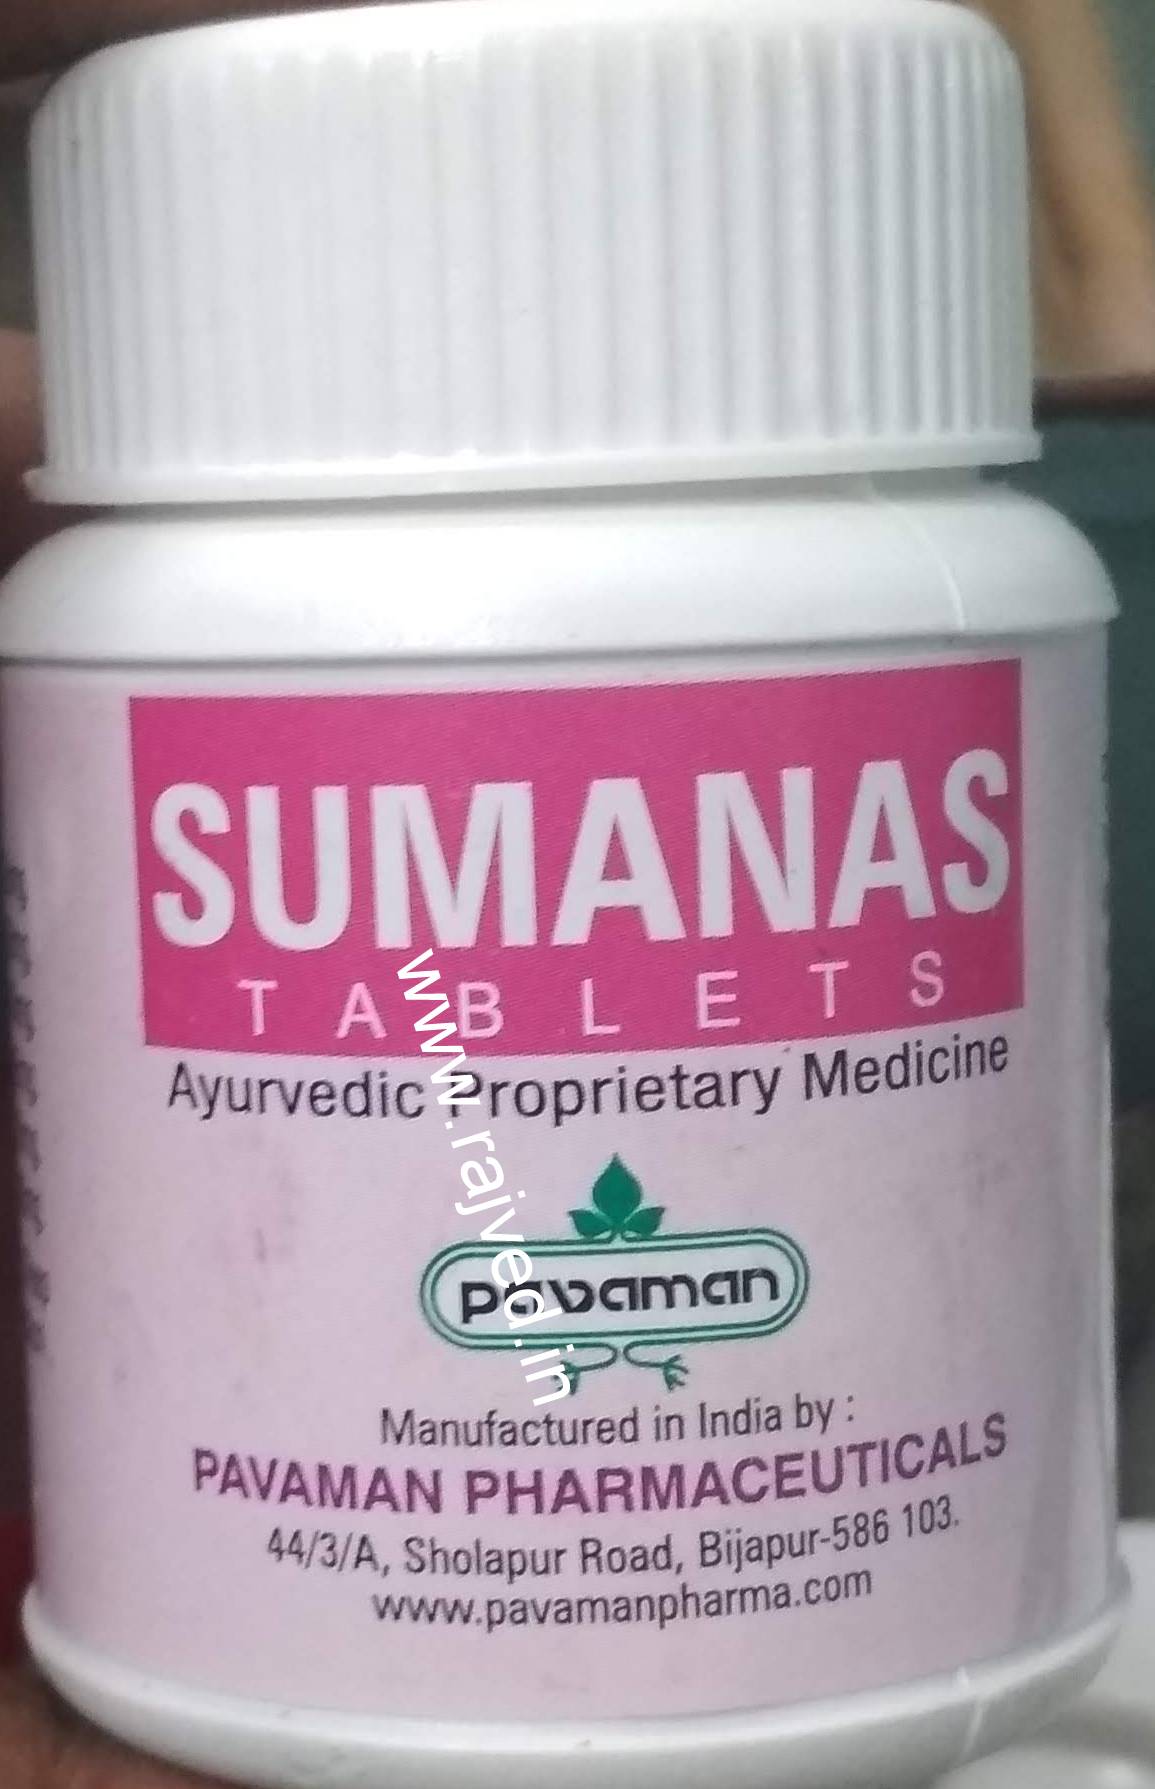 sumanas 100tab upto 20% off pavaman pharmaceuticals